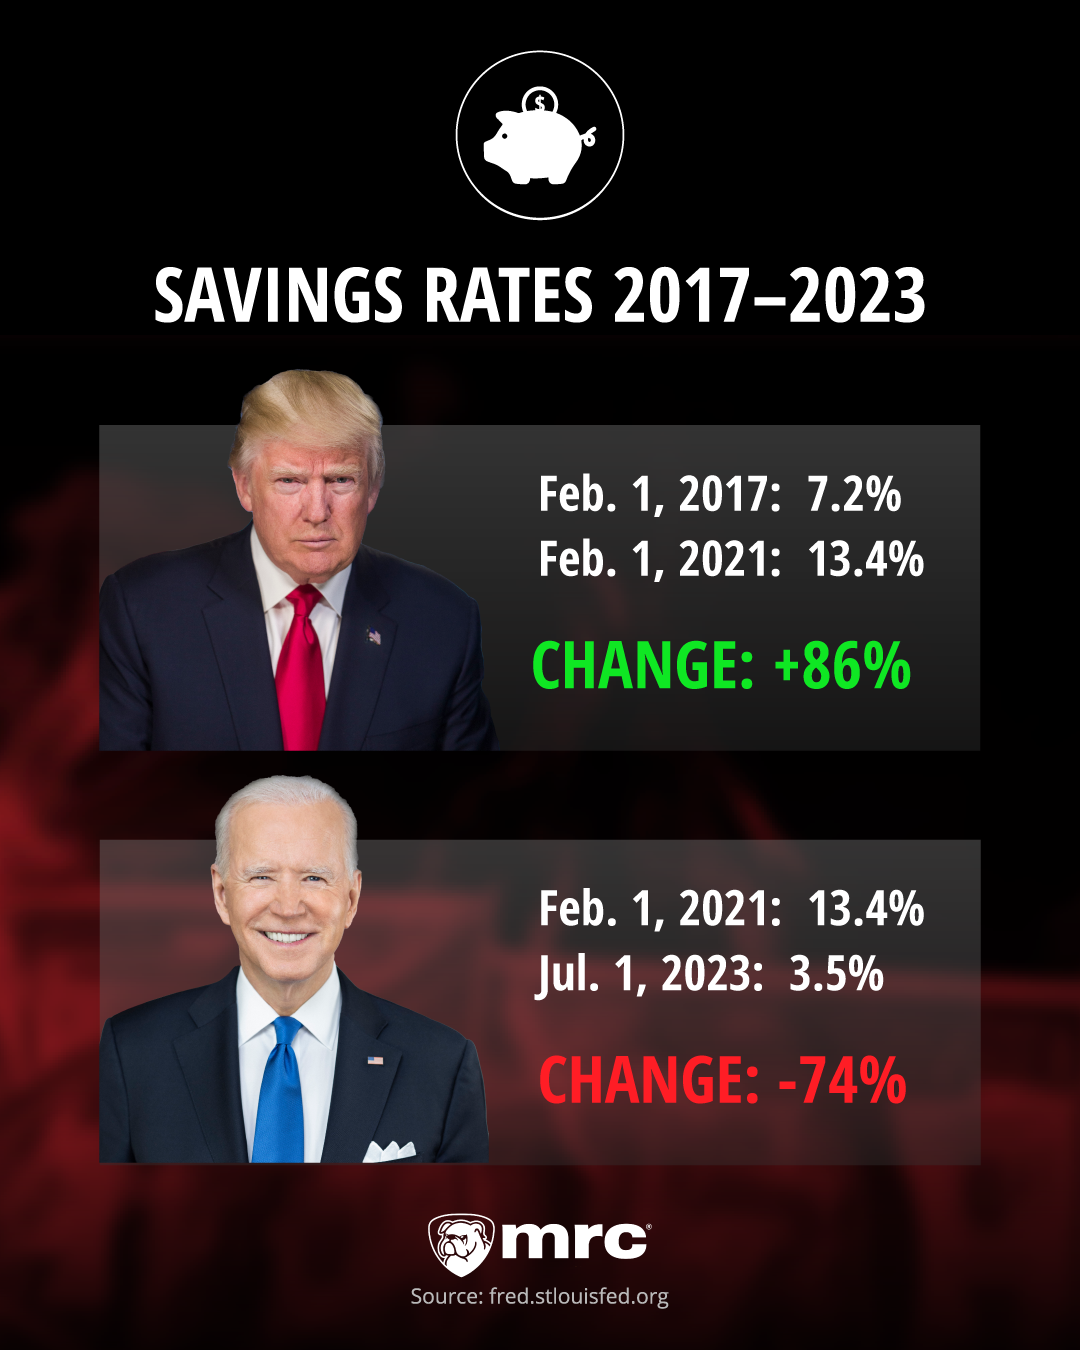 Personal Savings Rate in July 2023